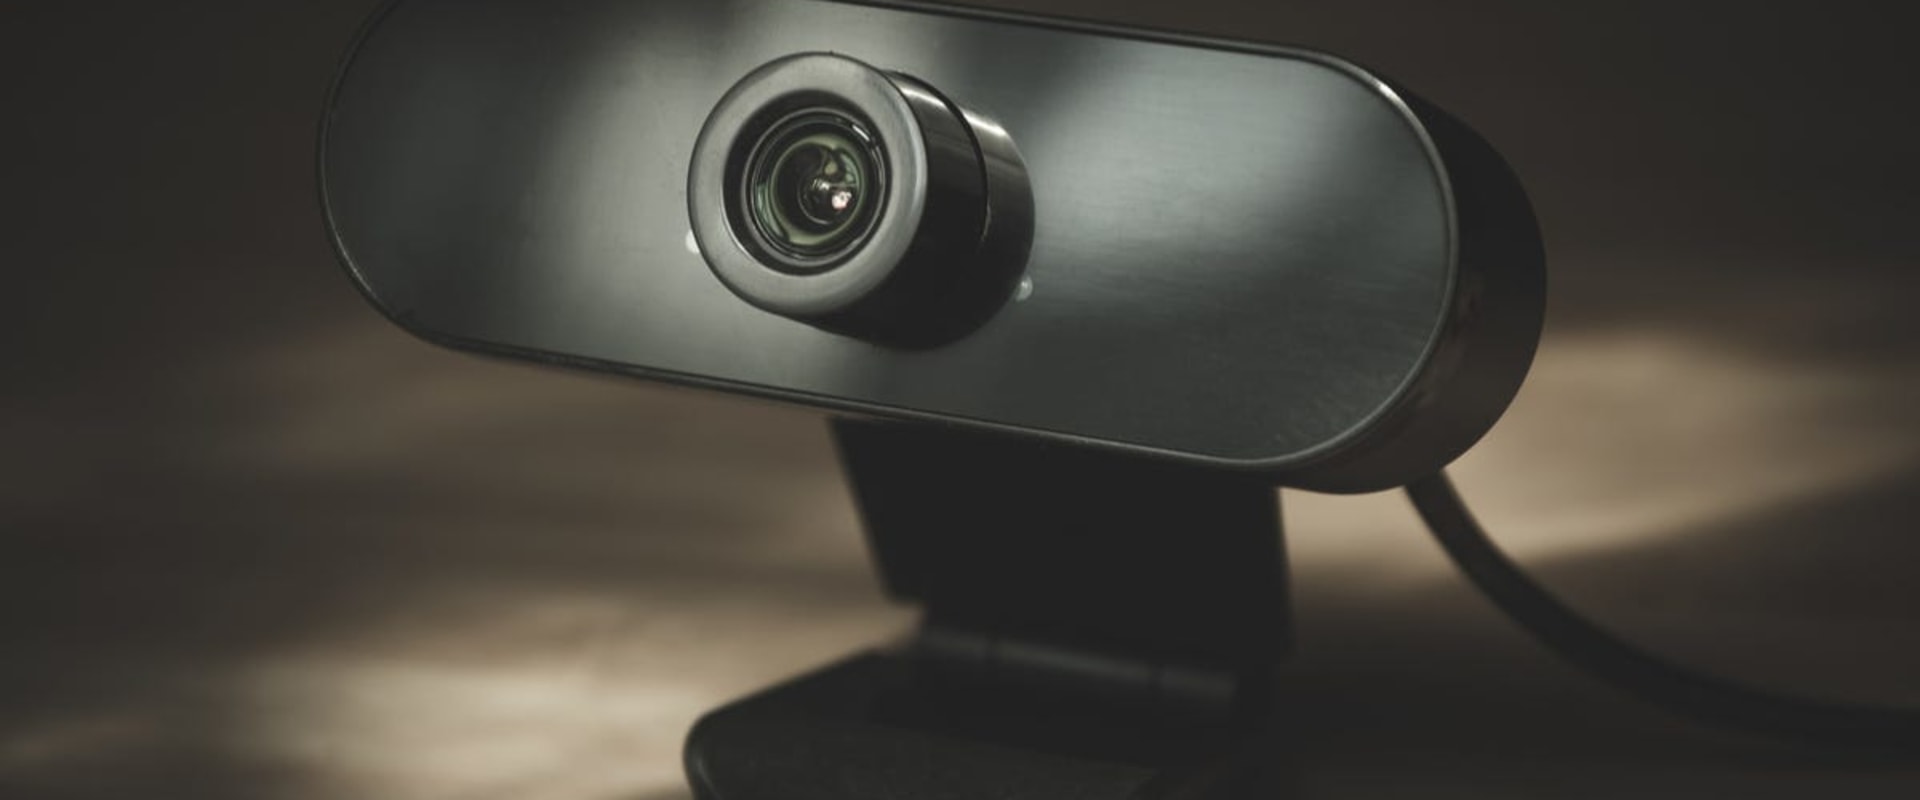 Explore the Zoom Capabilities of Webcams